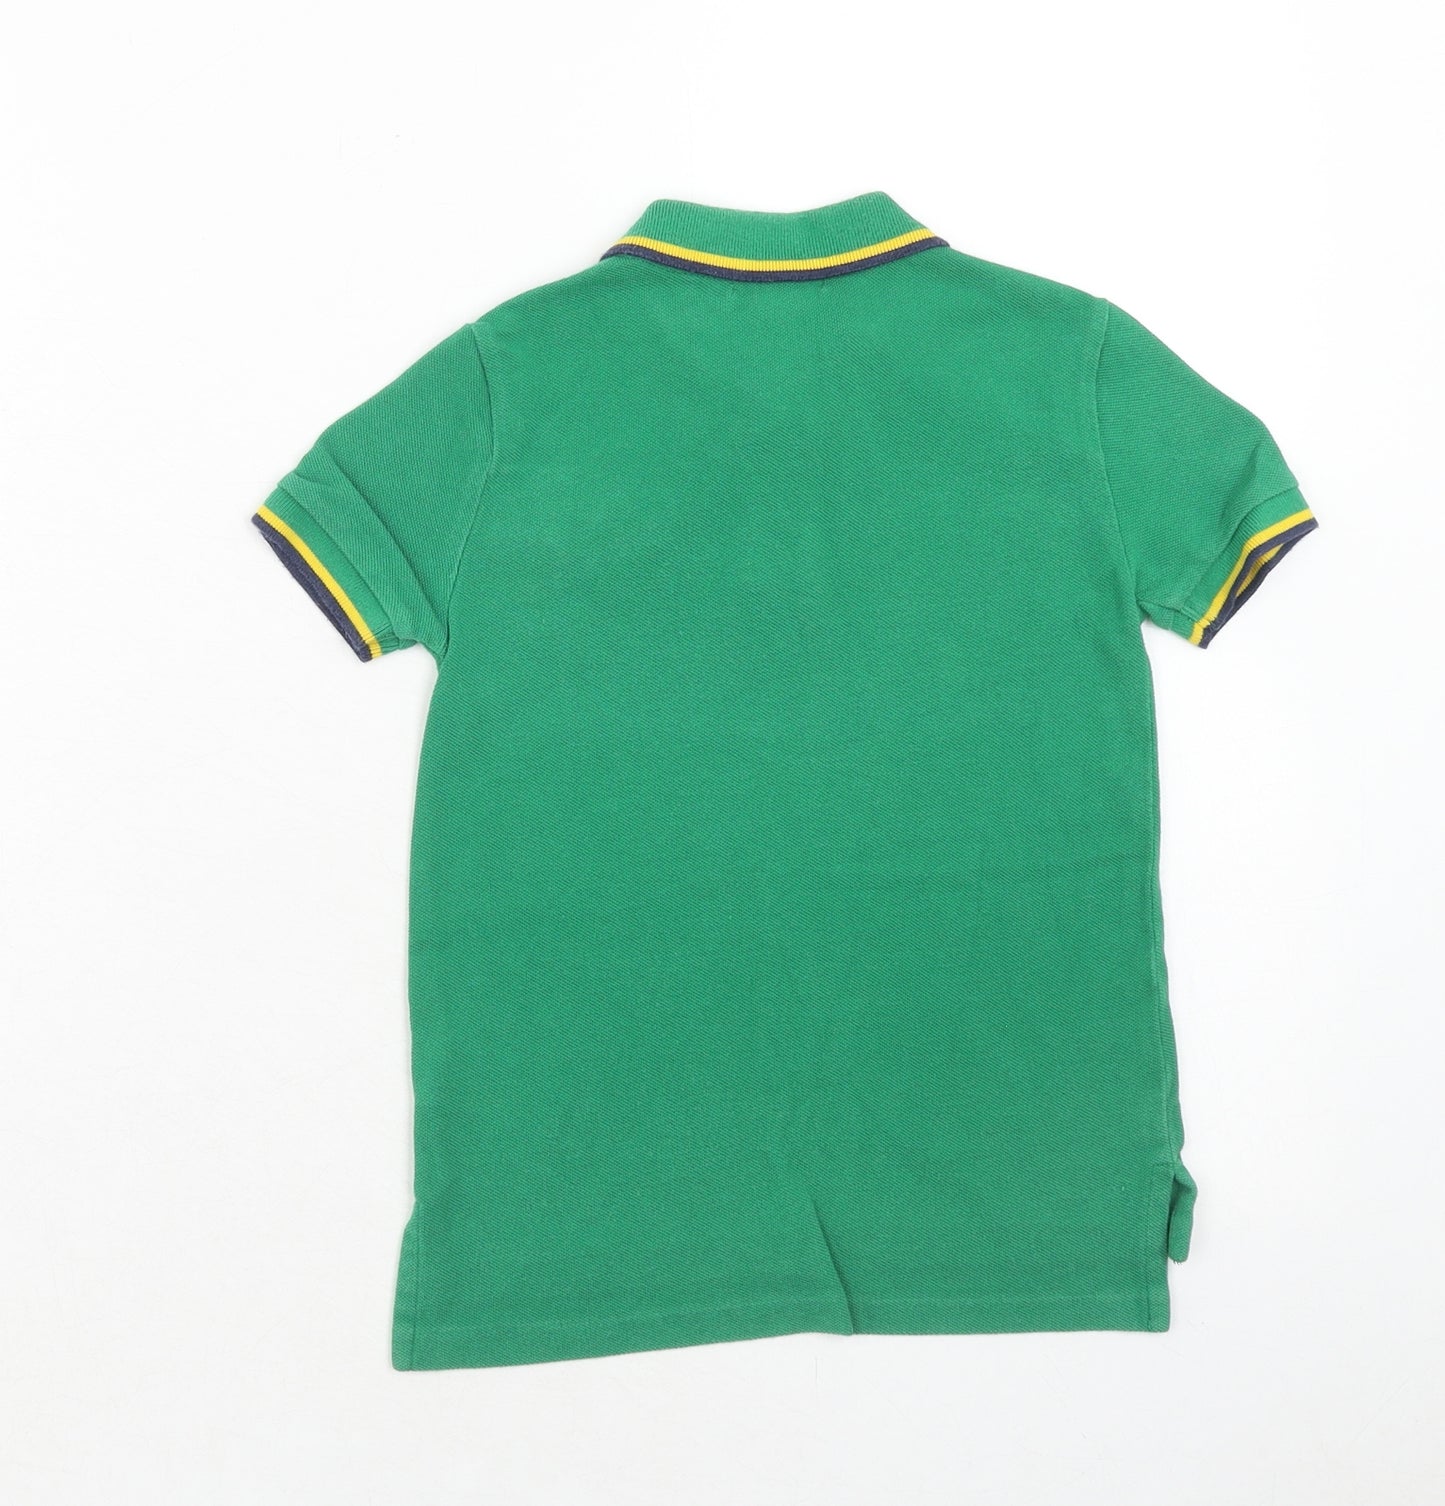 Ralph Lauren Boys Green Cotton Basic T-Shirt Size 4 Years Collared Button